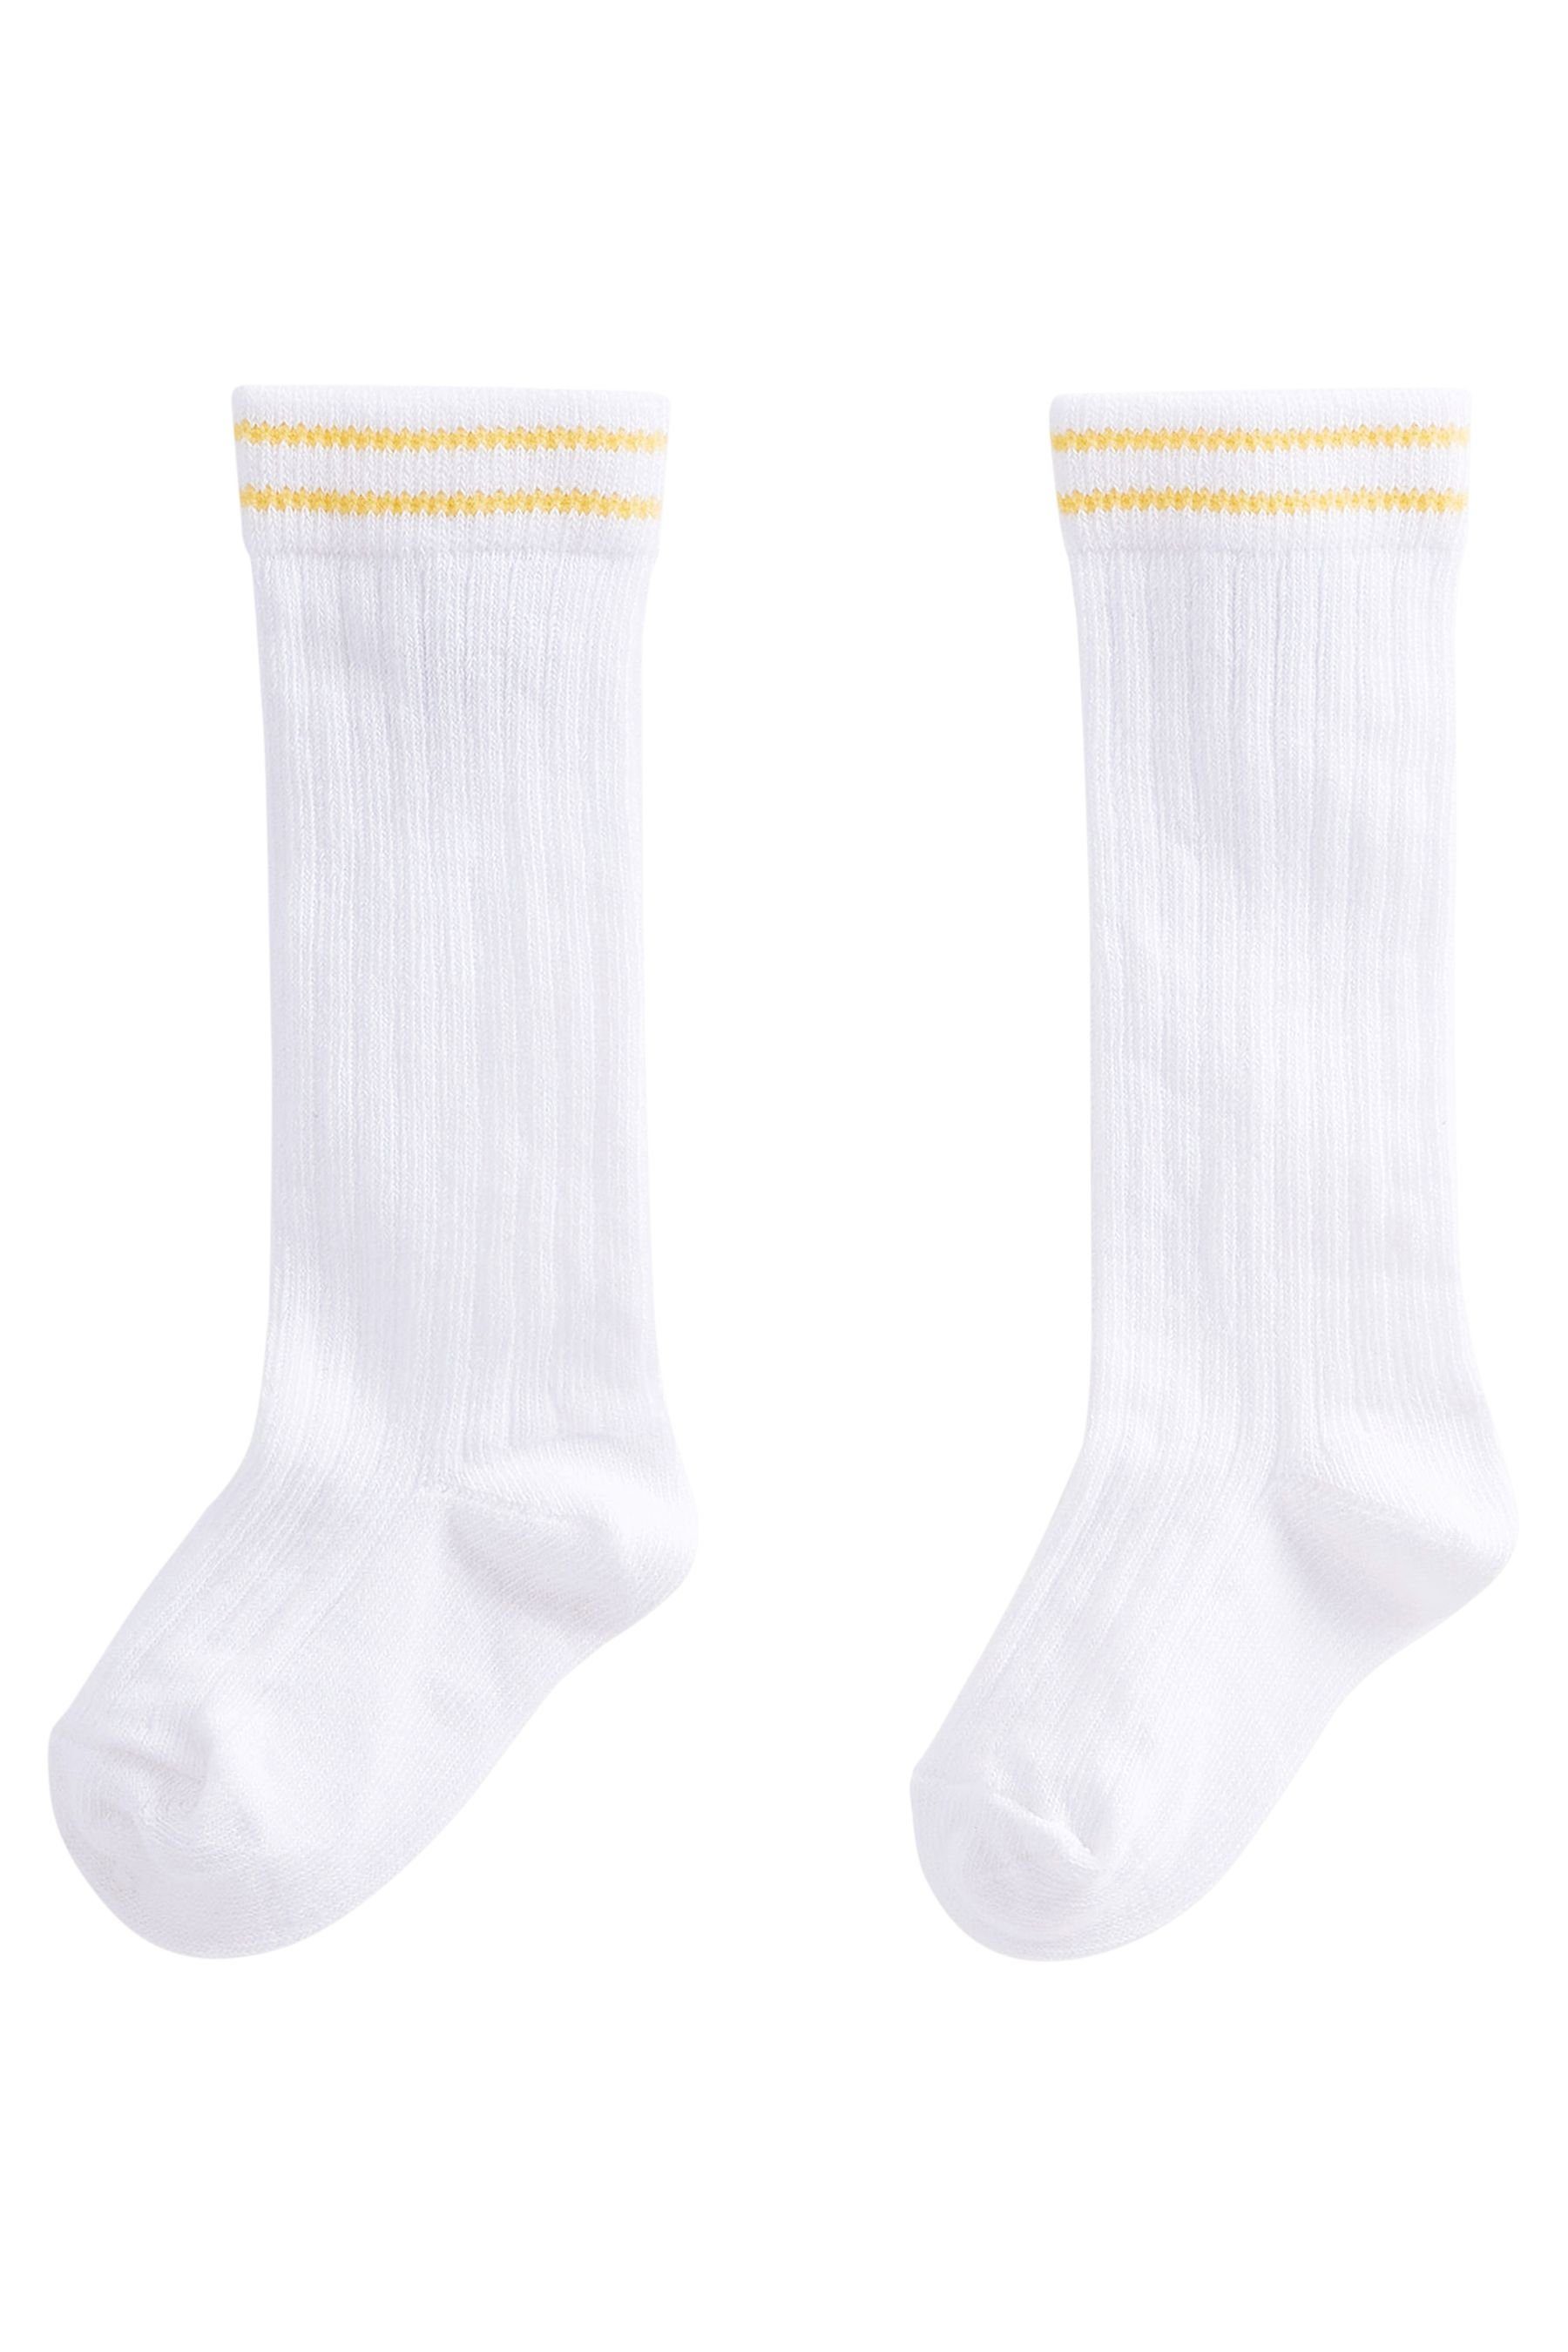 Next Hemd Yellow Hose (3-tlg) Socken elegantem Hose & Hemd, Babyset und kurzer Lemon mit